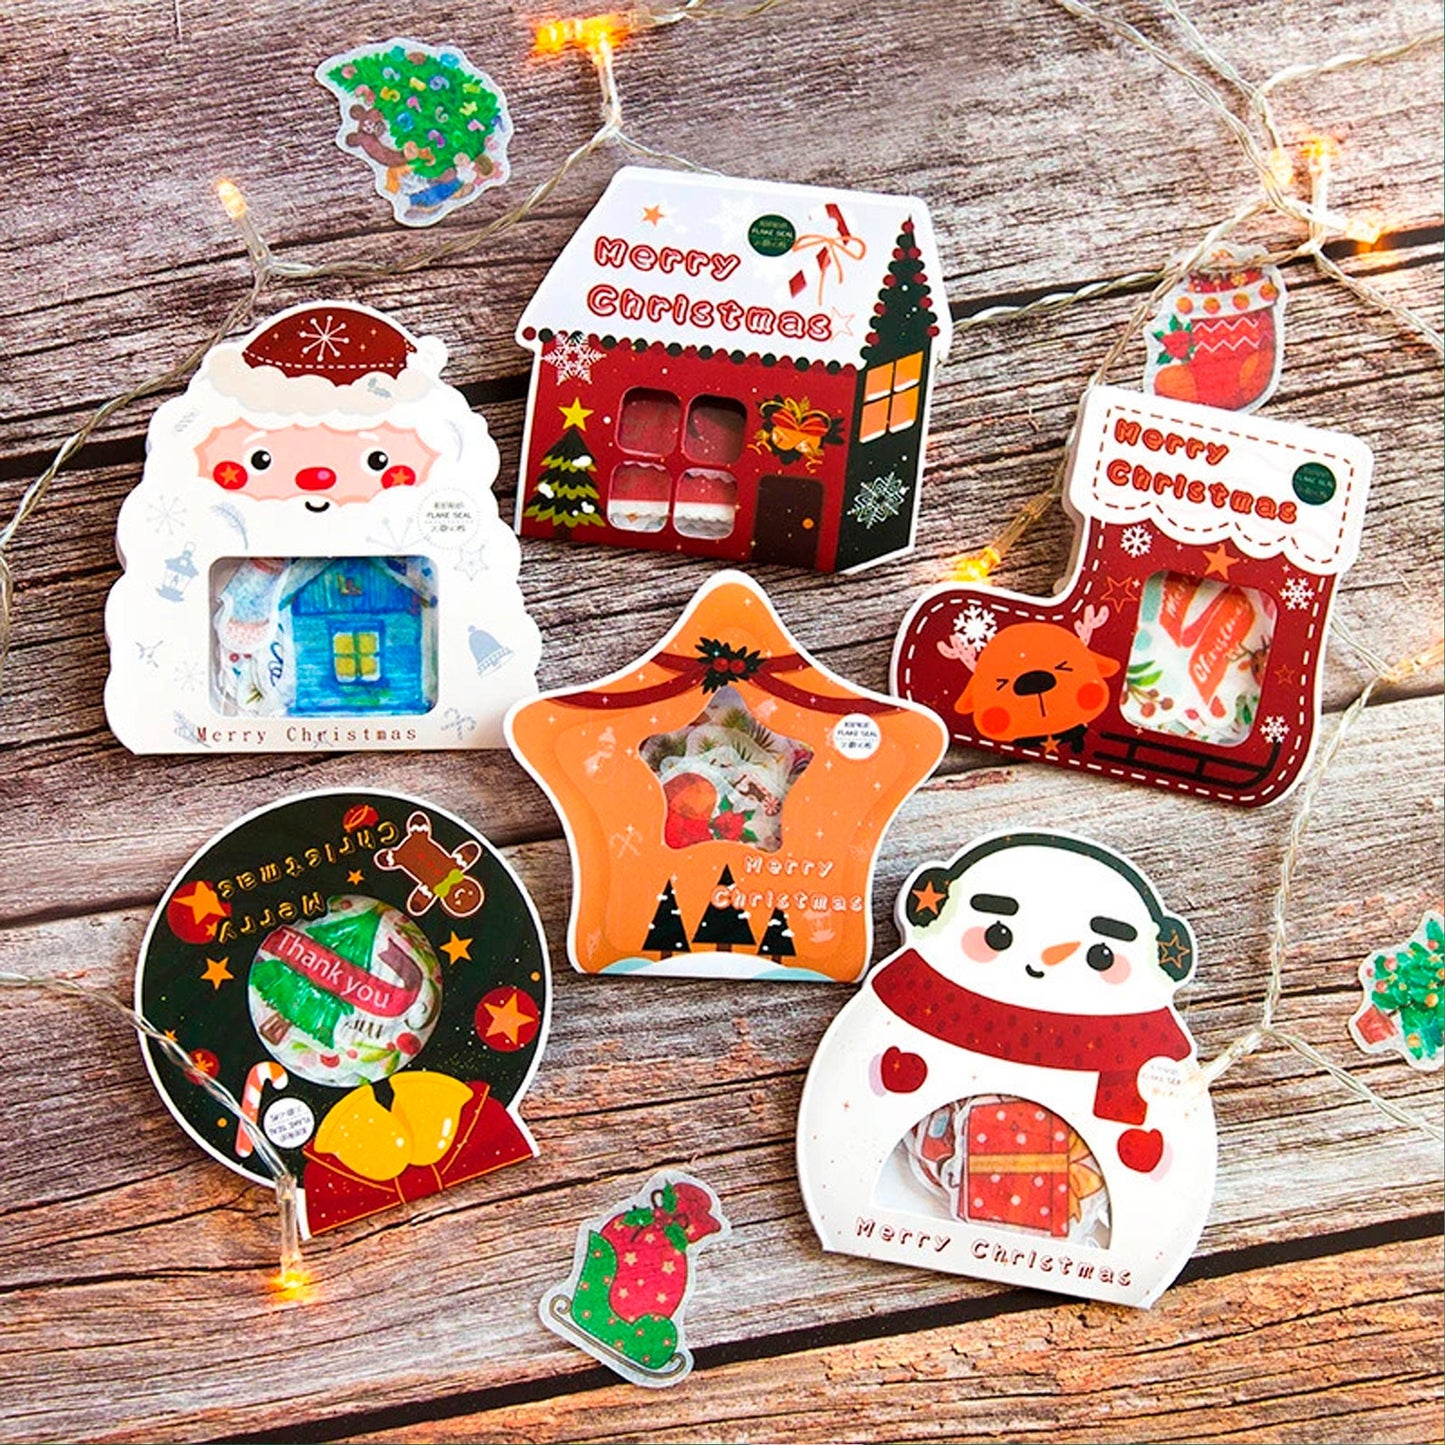 Christmas Kawaii Planner Stickers - Winter Stickers - Kawaii Holiday Stickers - Journal Stickers - Cute Stickers Christmas and Winter b1i3